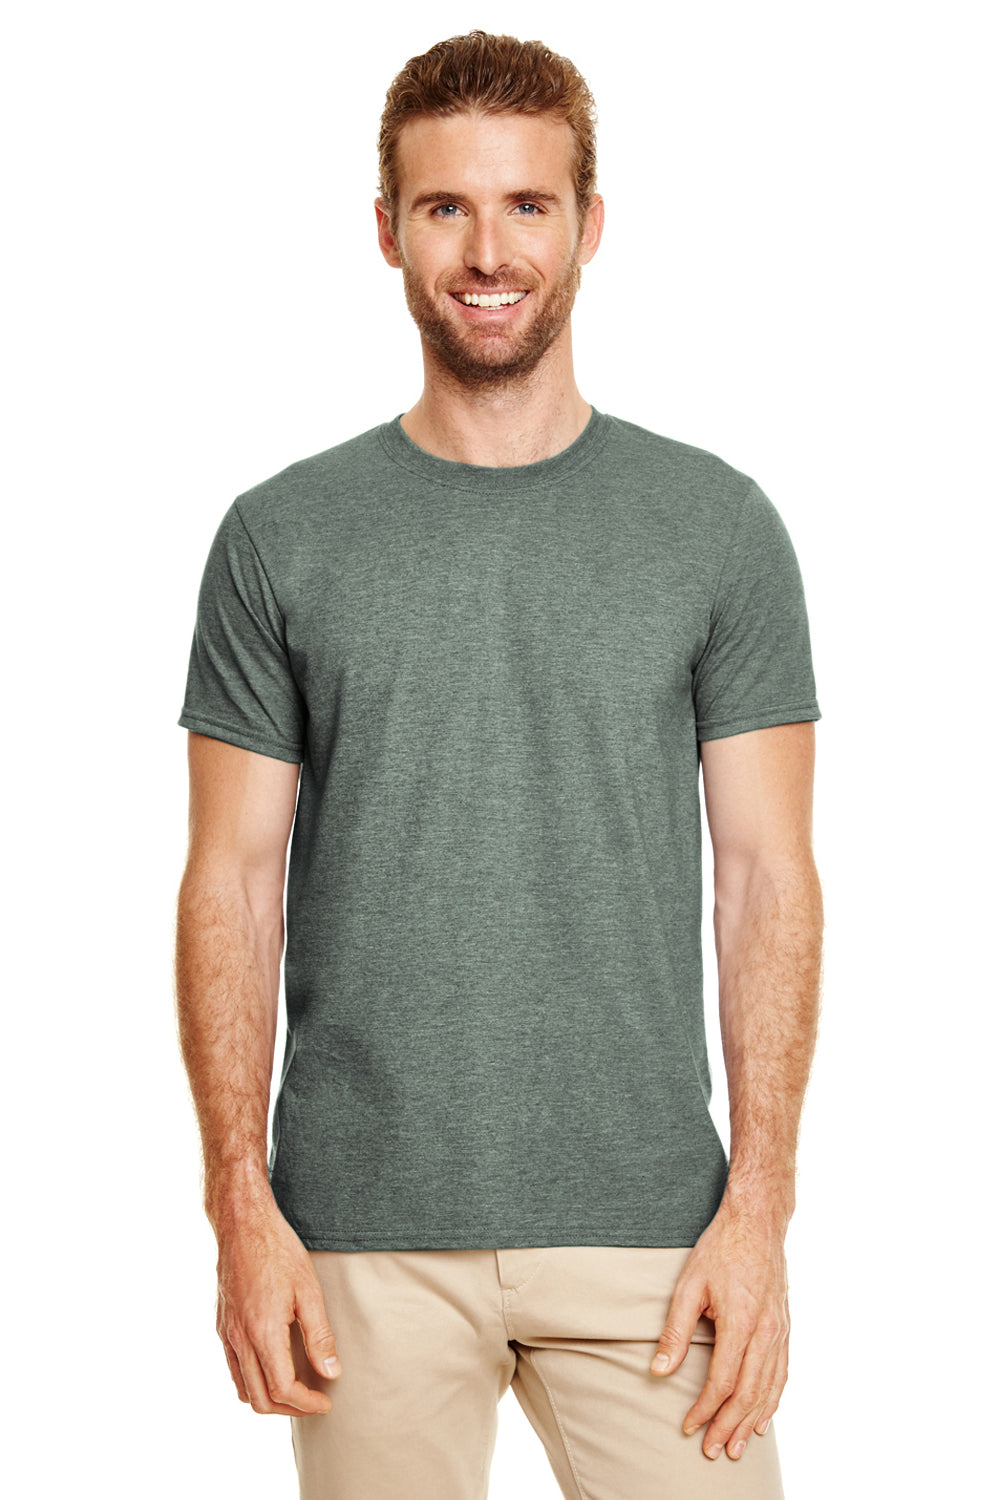 Gildan G640 Mens Softstyle Short Sleeve Crewneck T-Shirt Heather Forest Green Front